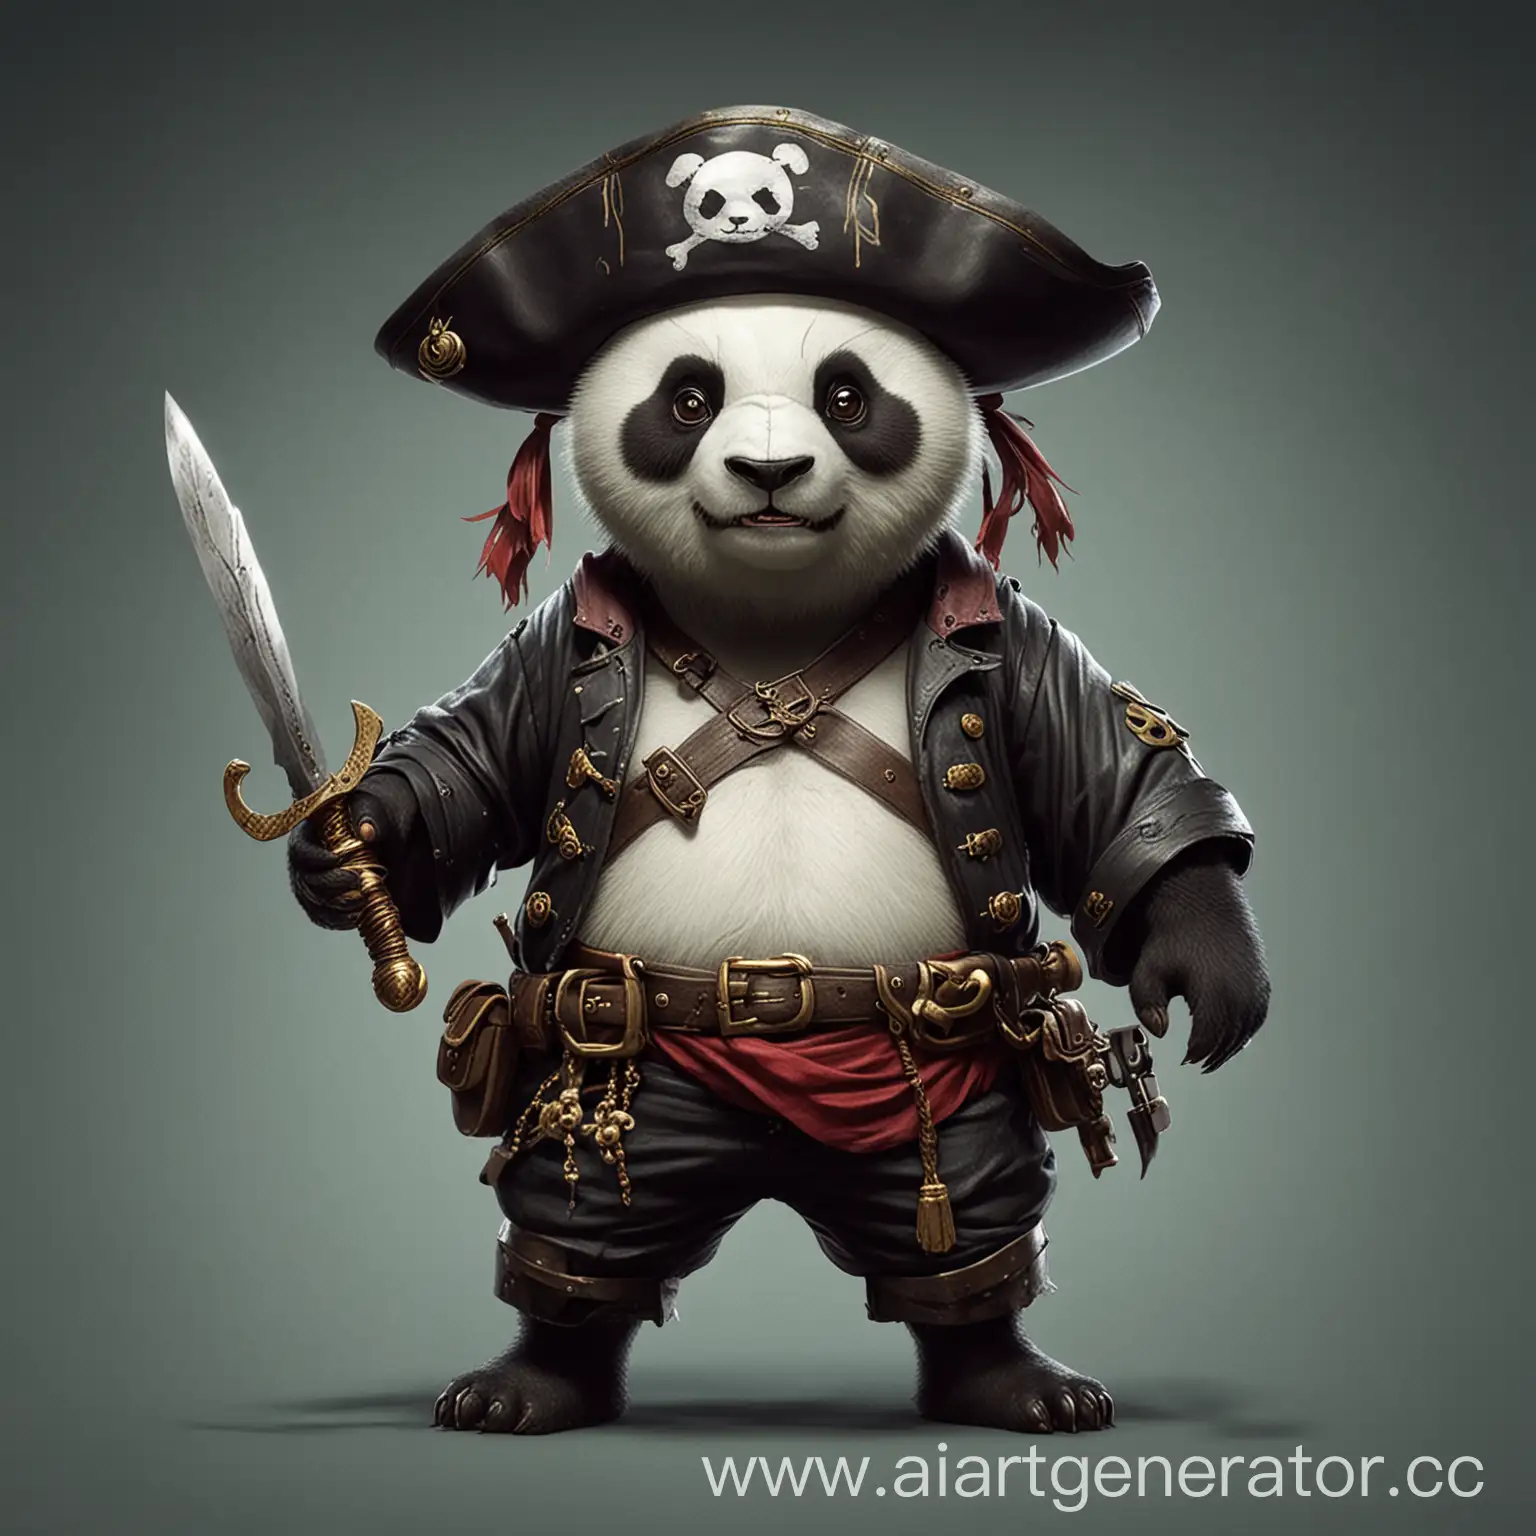 Adventurous-Panda-Pirate-in-a-Bamboo-Ship